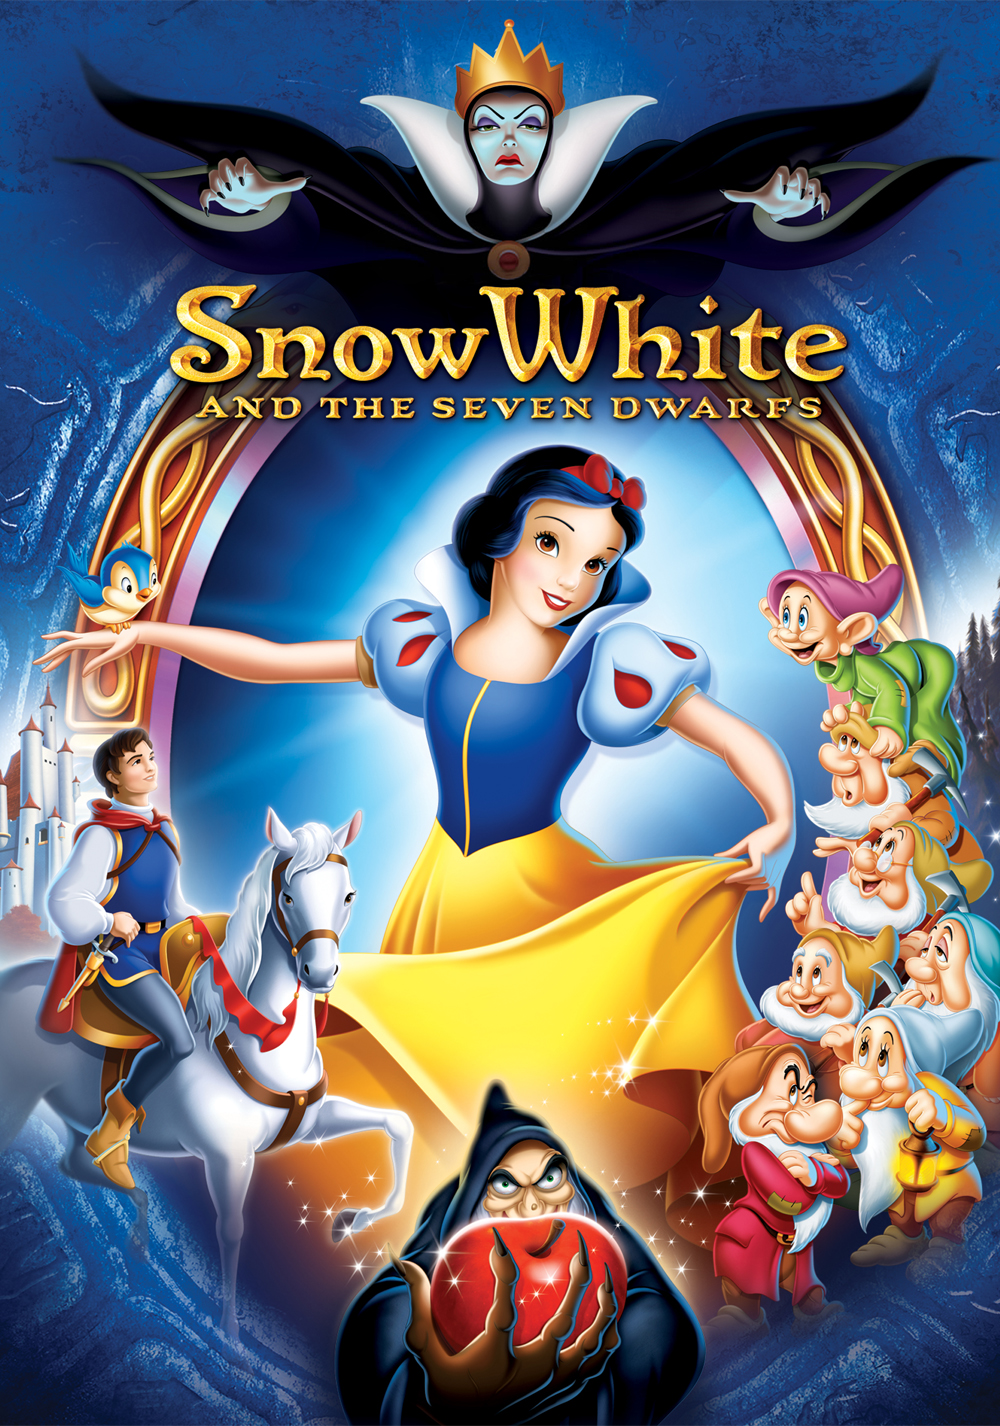 Snow White and the Seven Dwarfs: Budget 1.4 million Box office 416 million